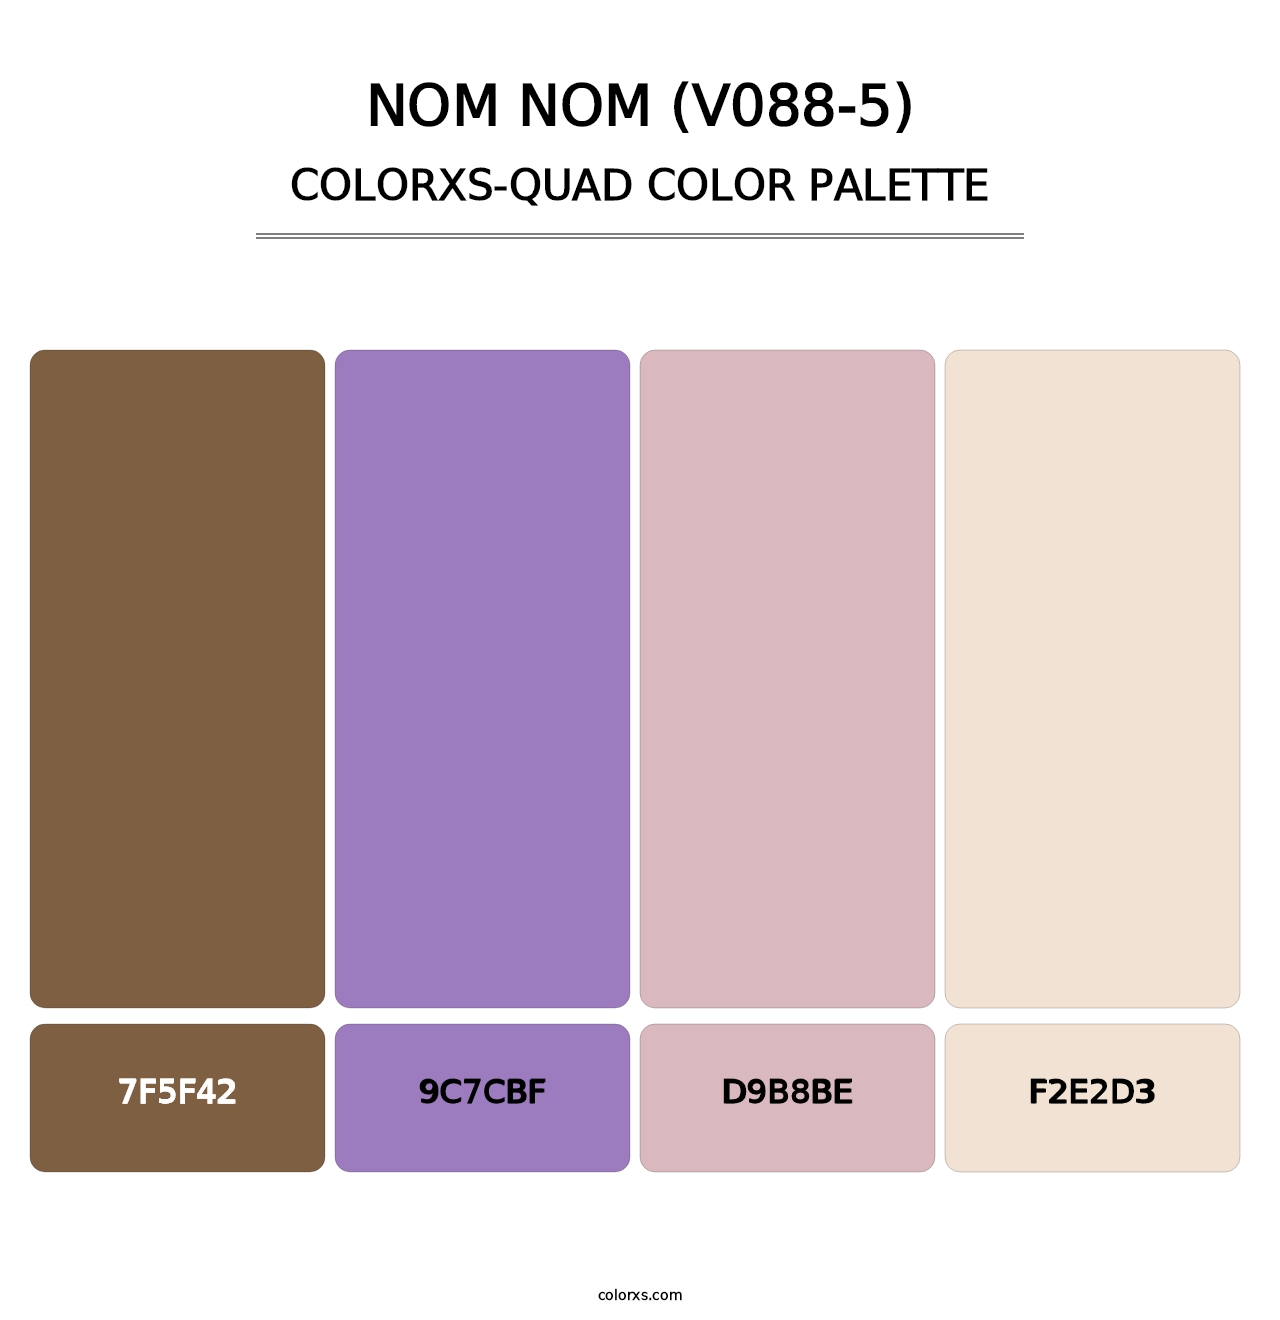 Nom Nom (V088-5) - Colorxs Quad Palette